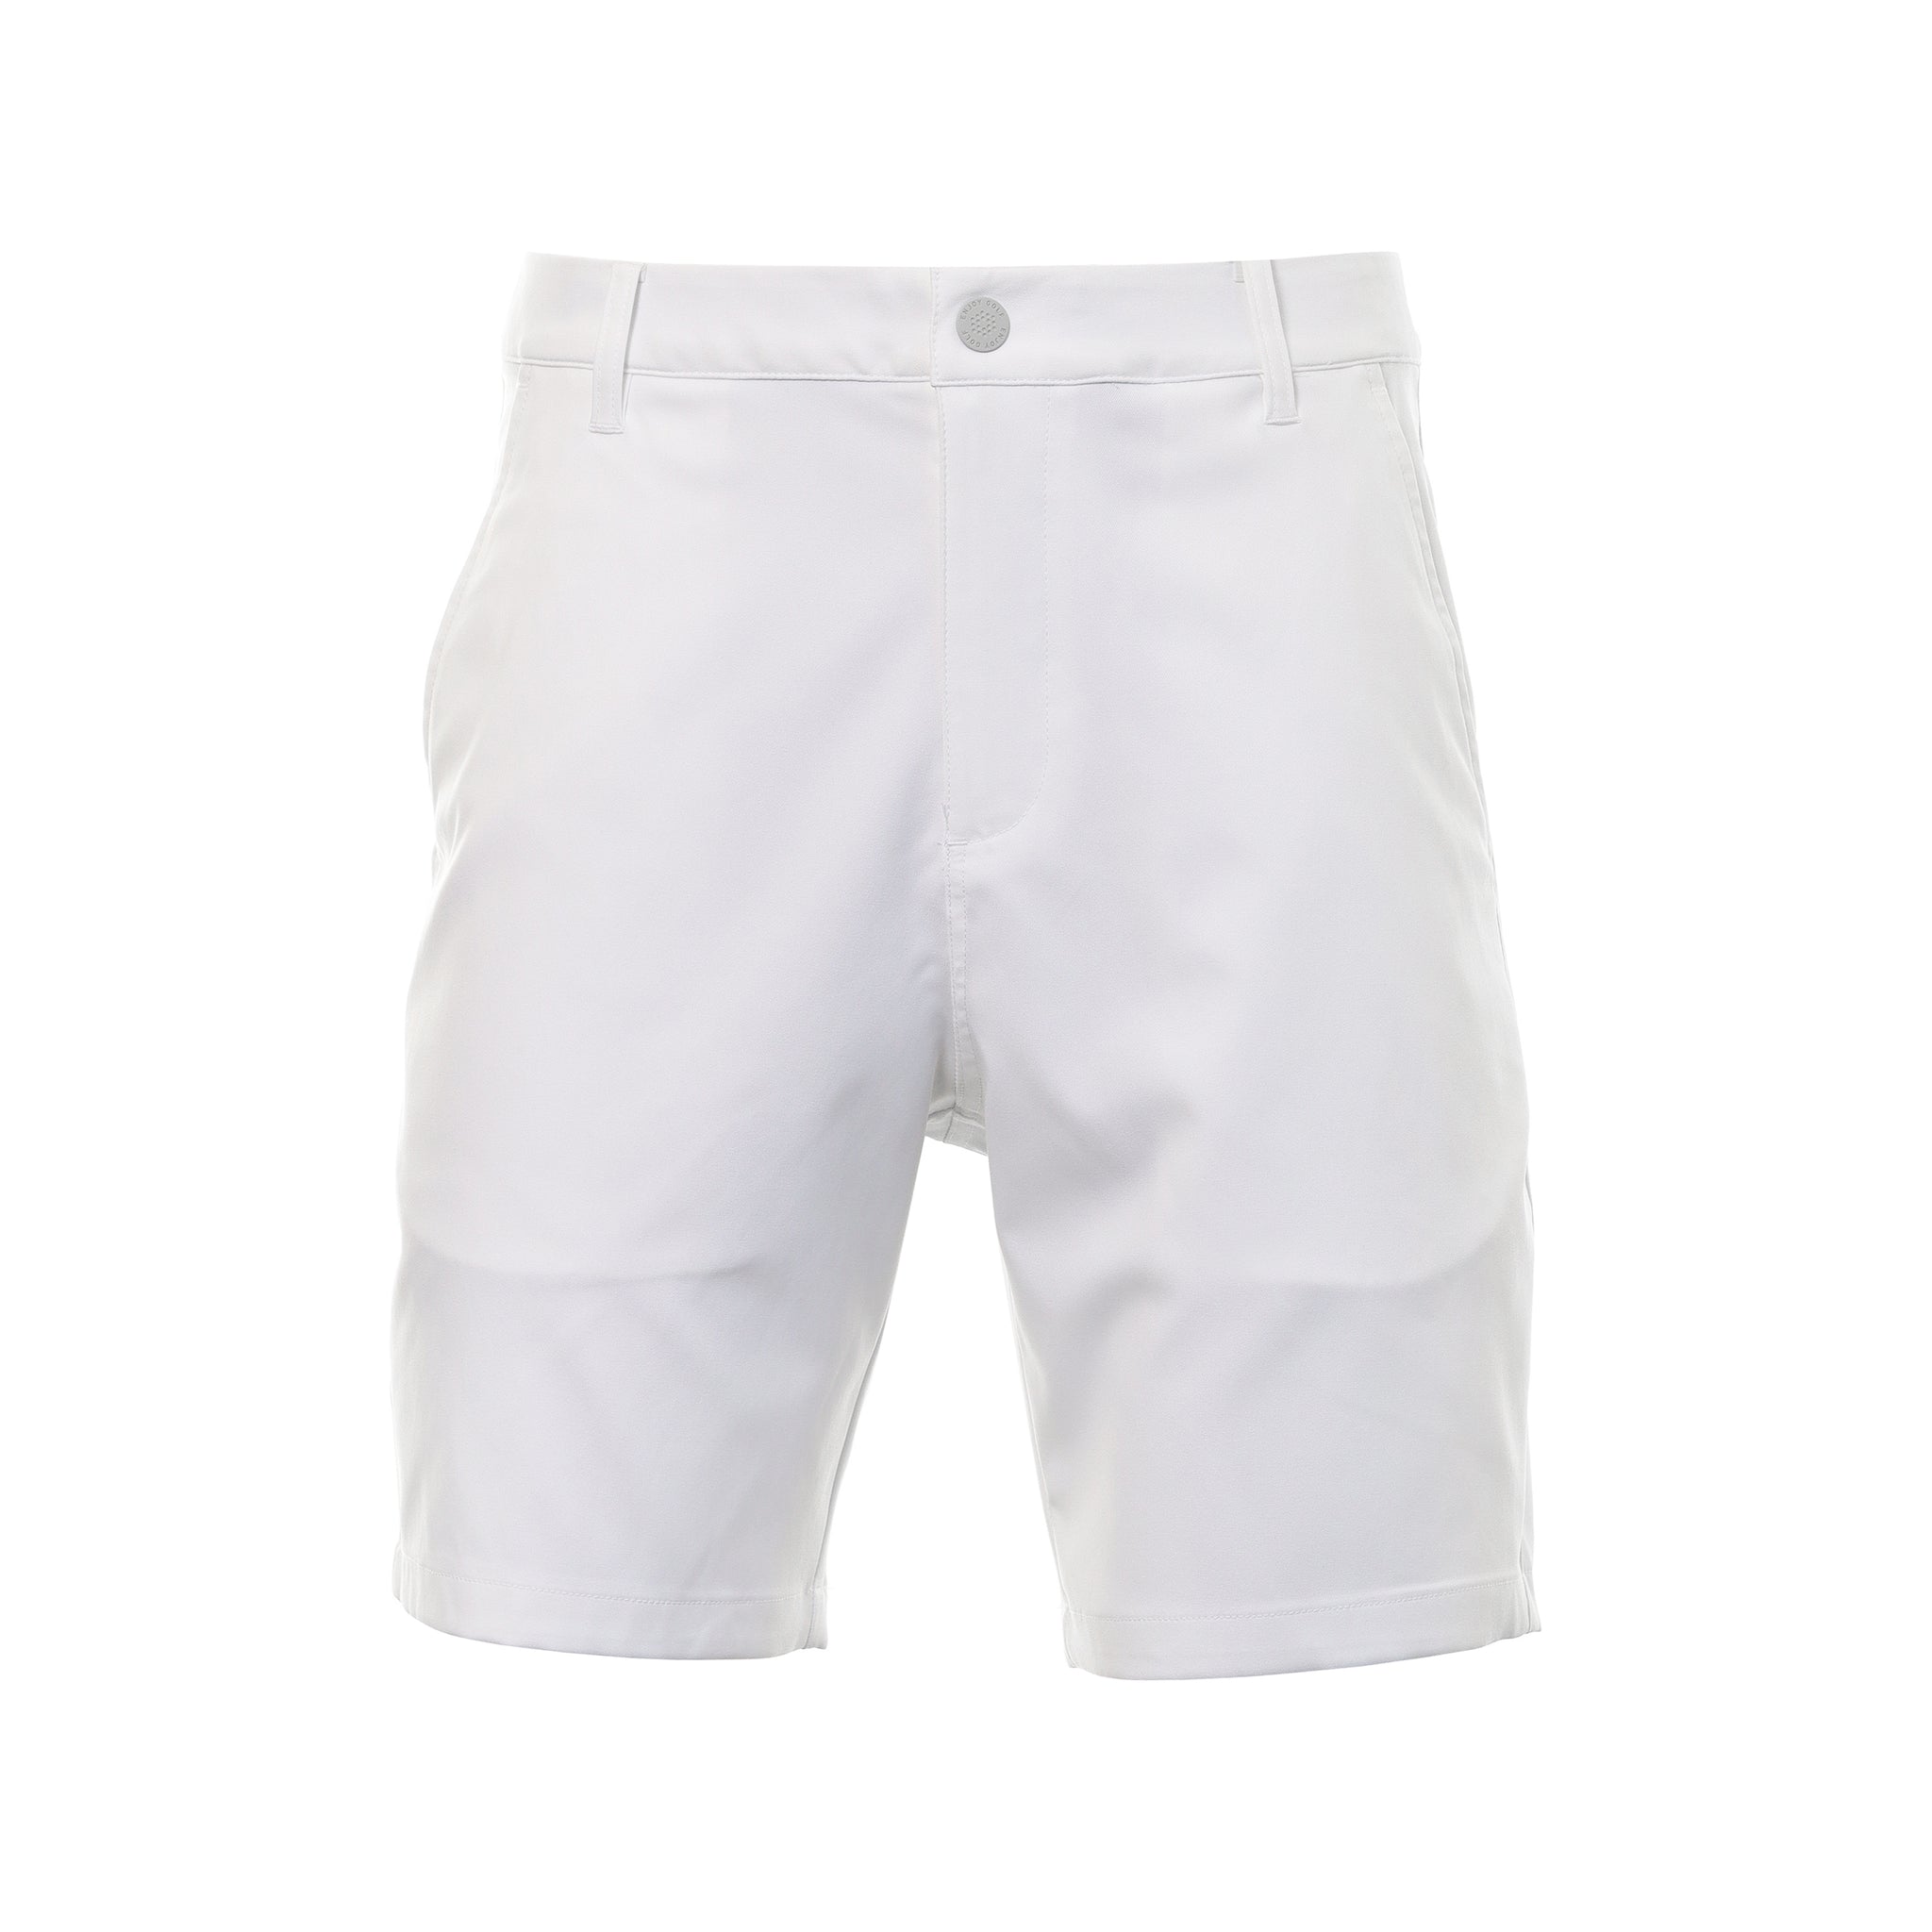 puma-golf-dealer-8-shorts-537788-white-glow-01